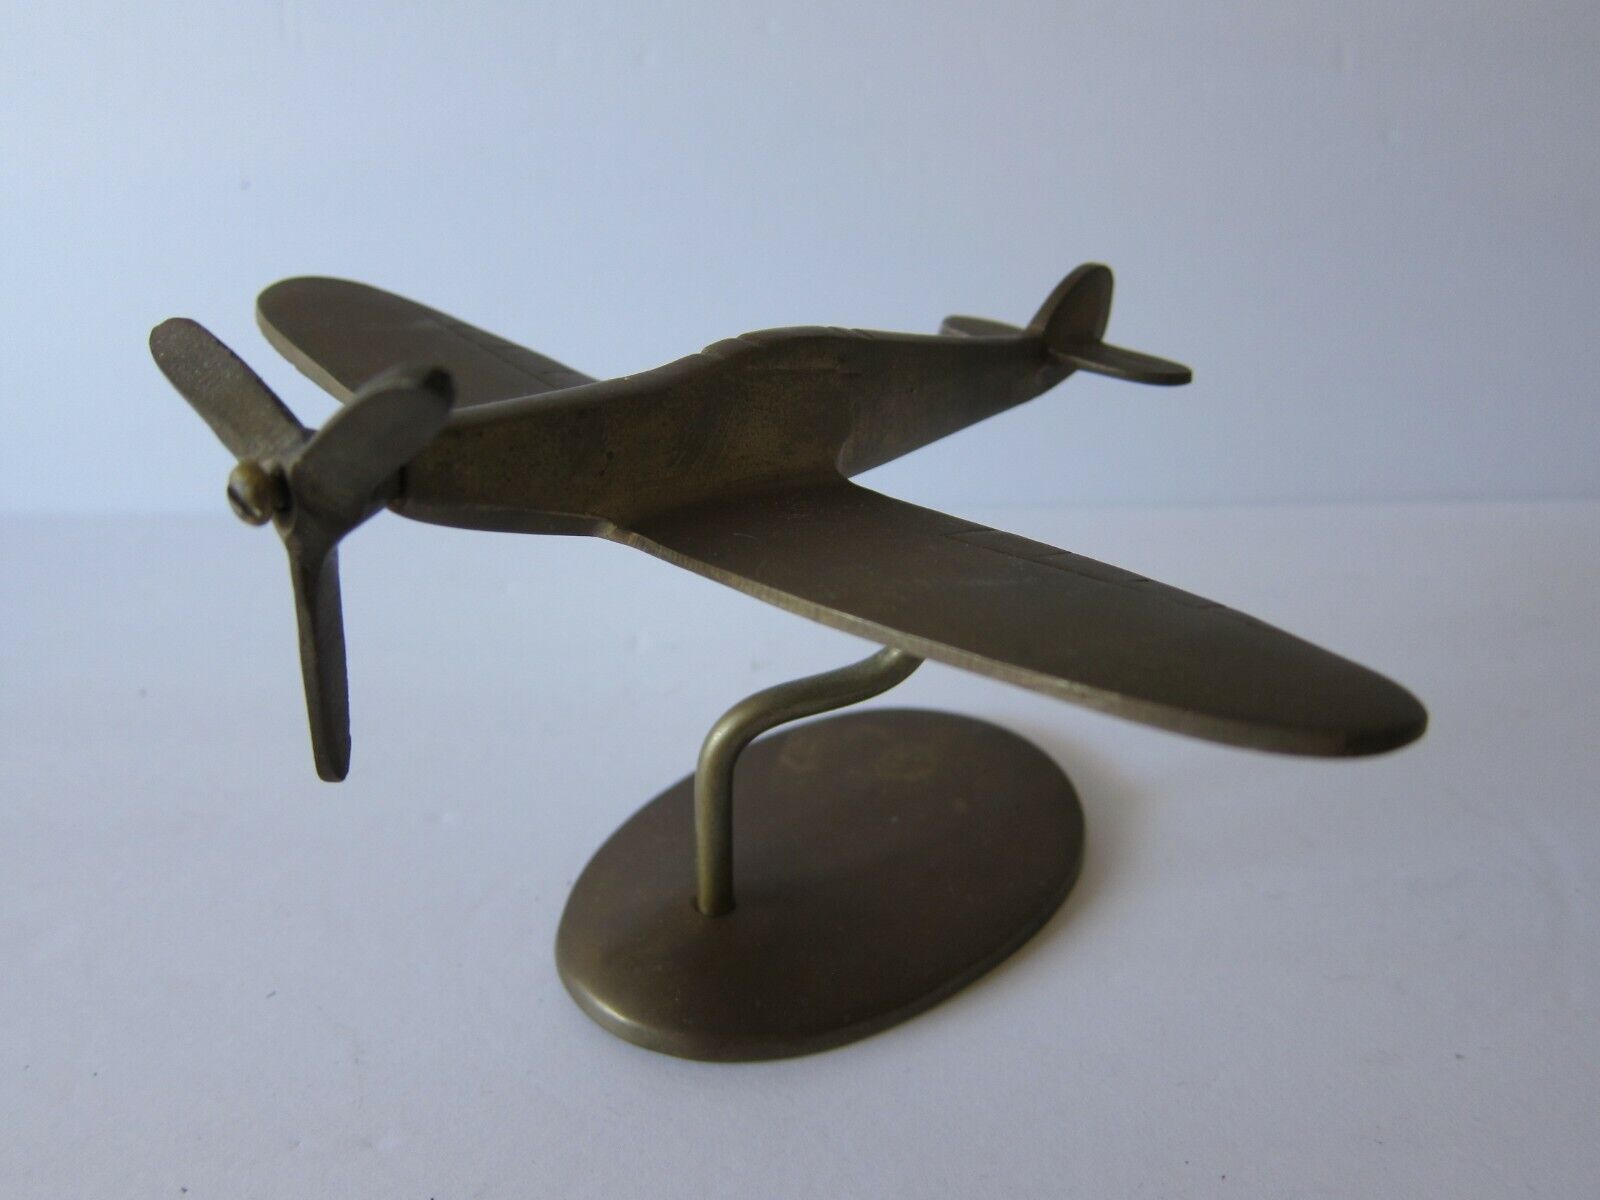 Vintage WWll Military Trench Art Brass Bullet Airplane British Spitfire